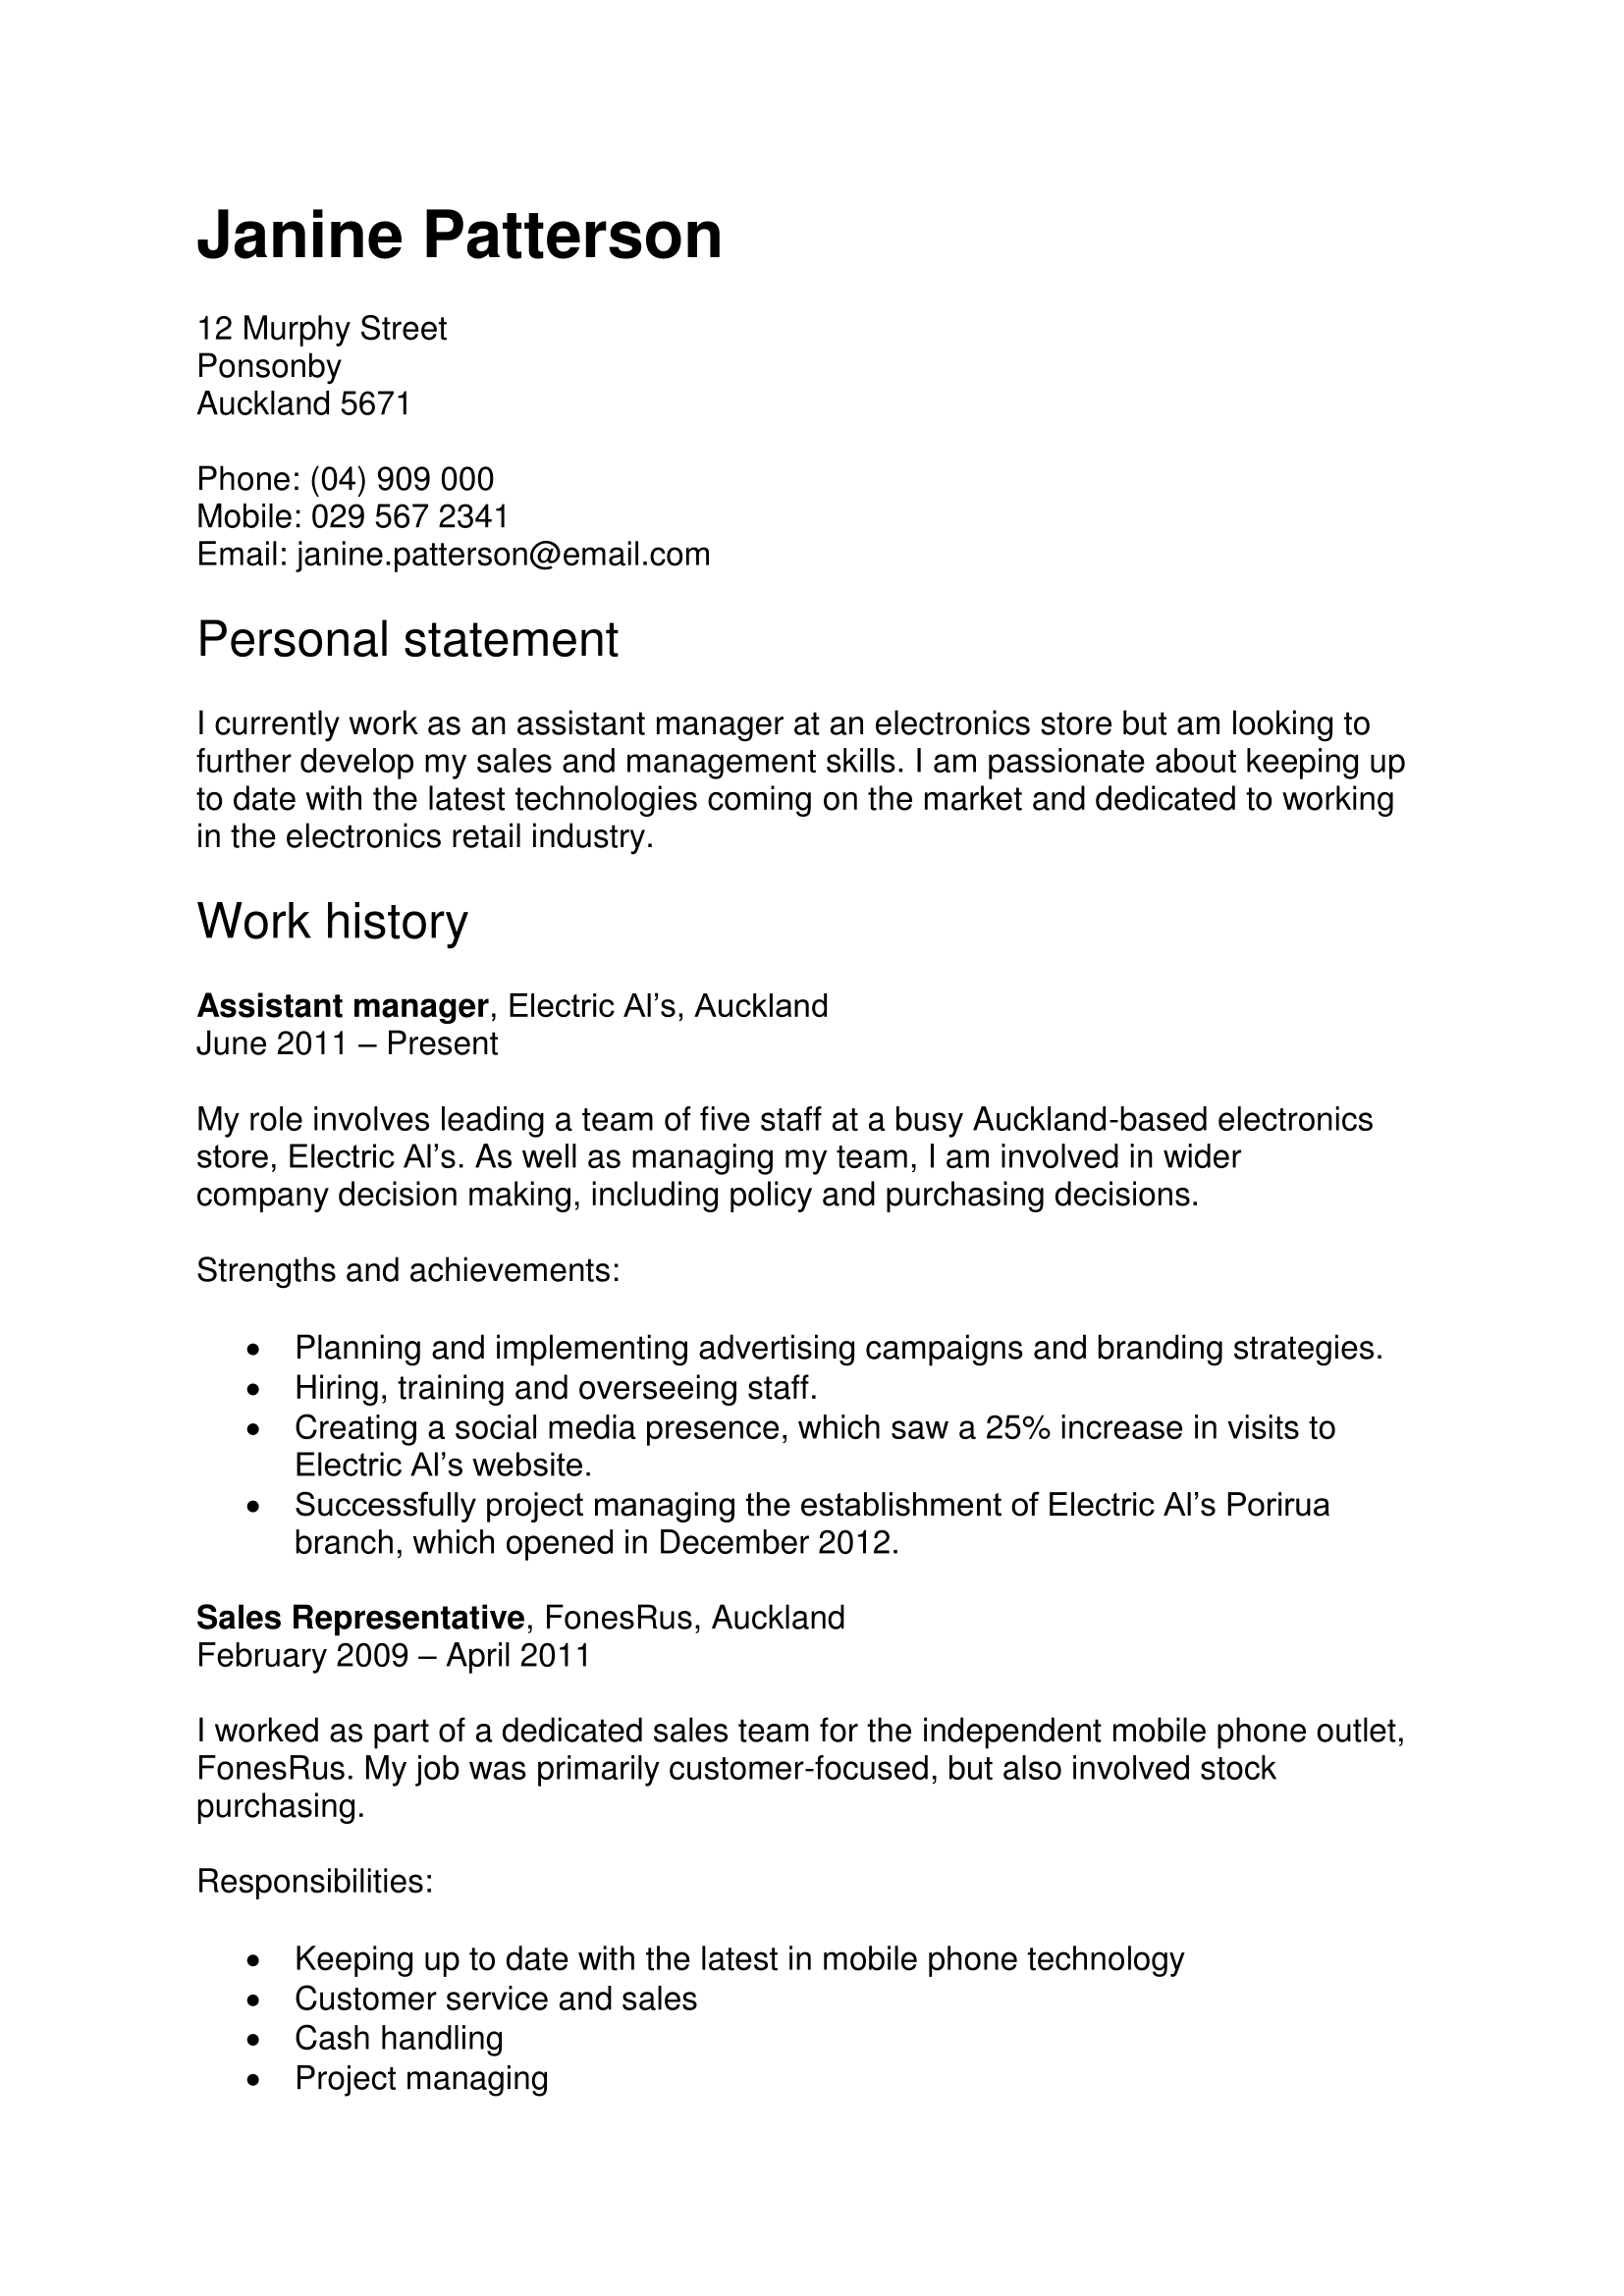 Cover letter cv email sample